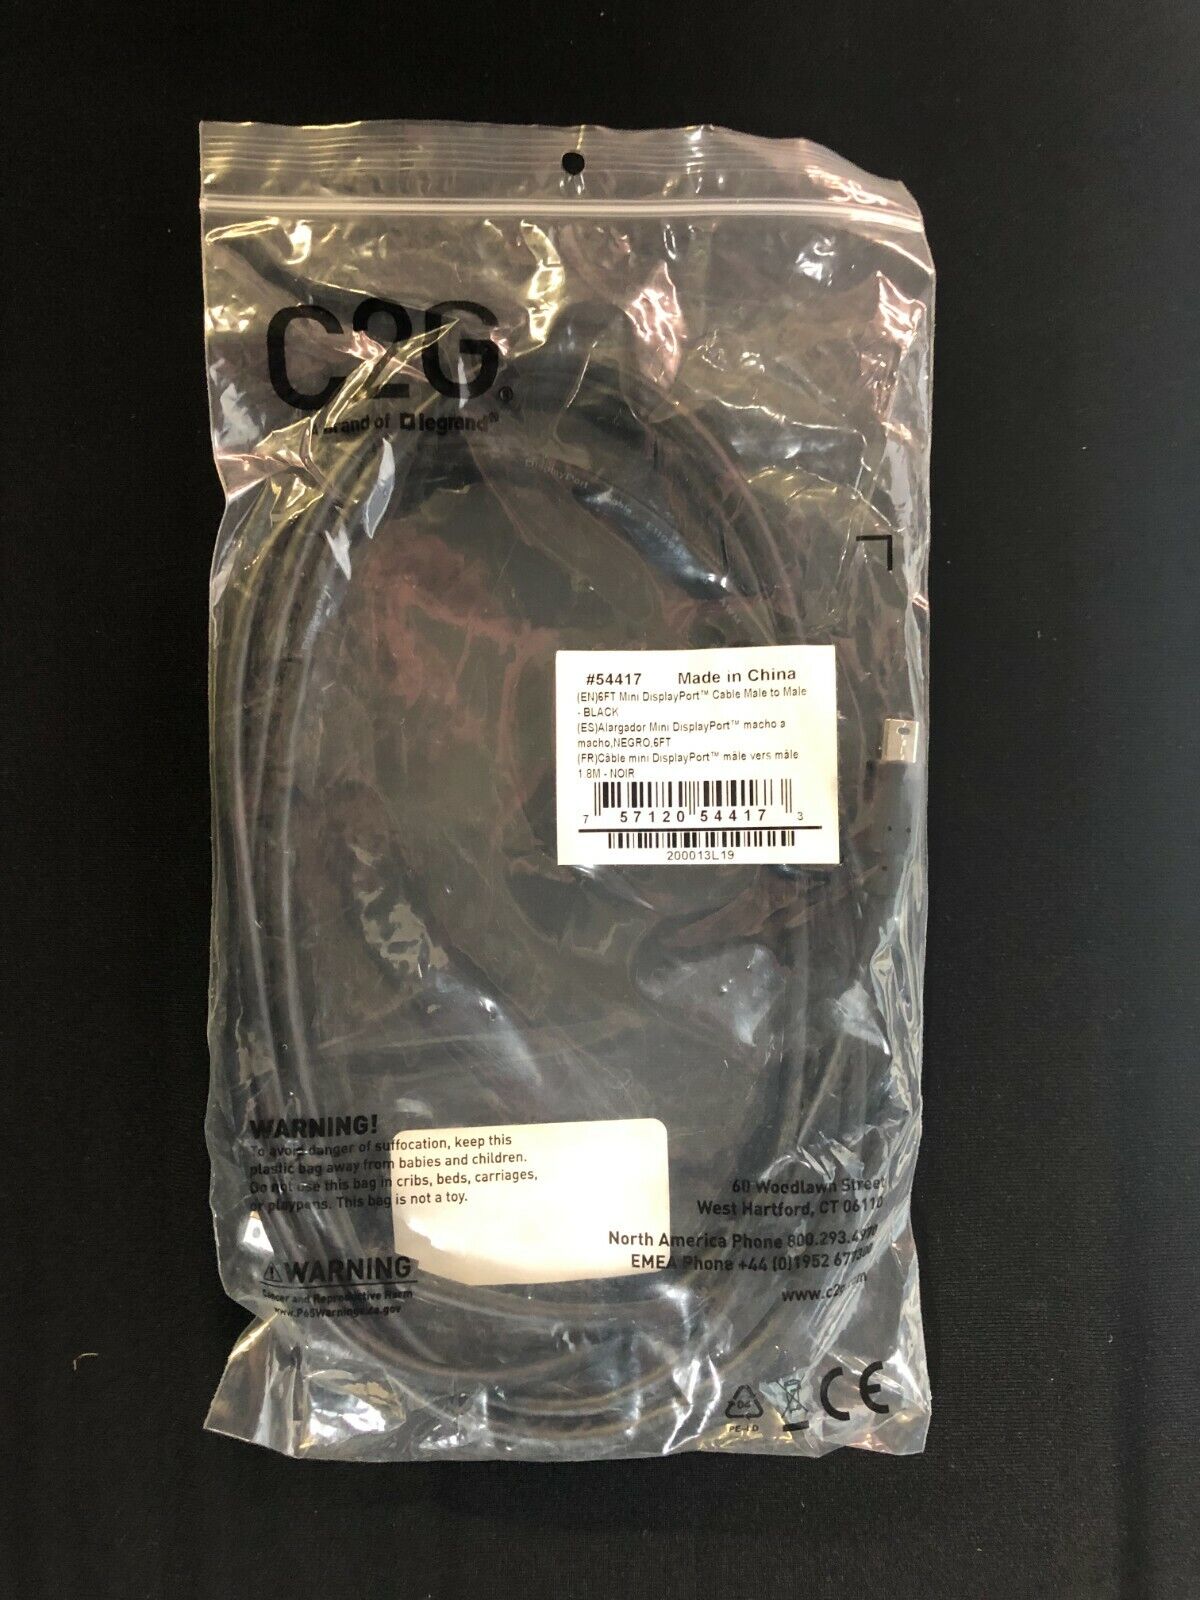 C2G 6ft Mini DisplayPort Cable 4K 30Hz - Black